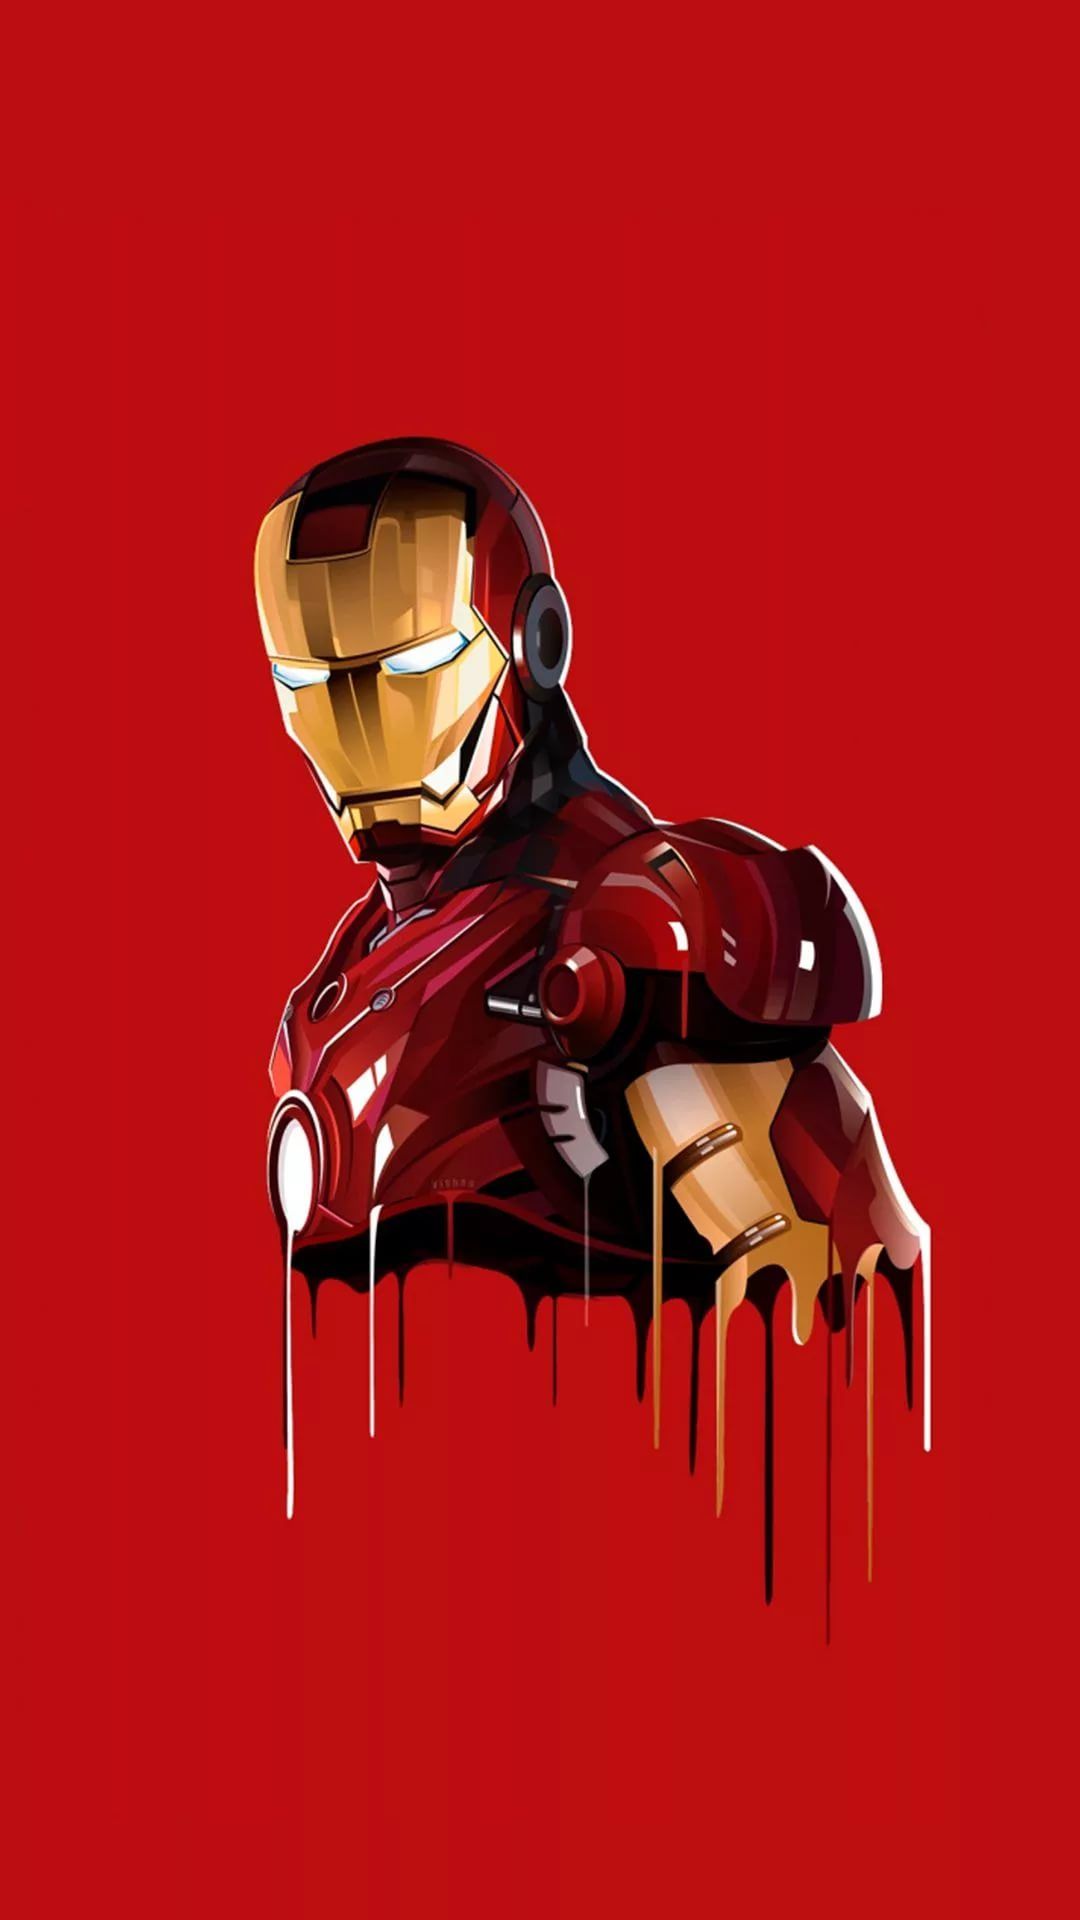 Cool Iron Man Wallpapers